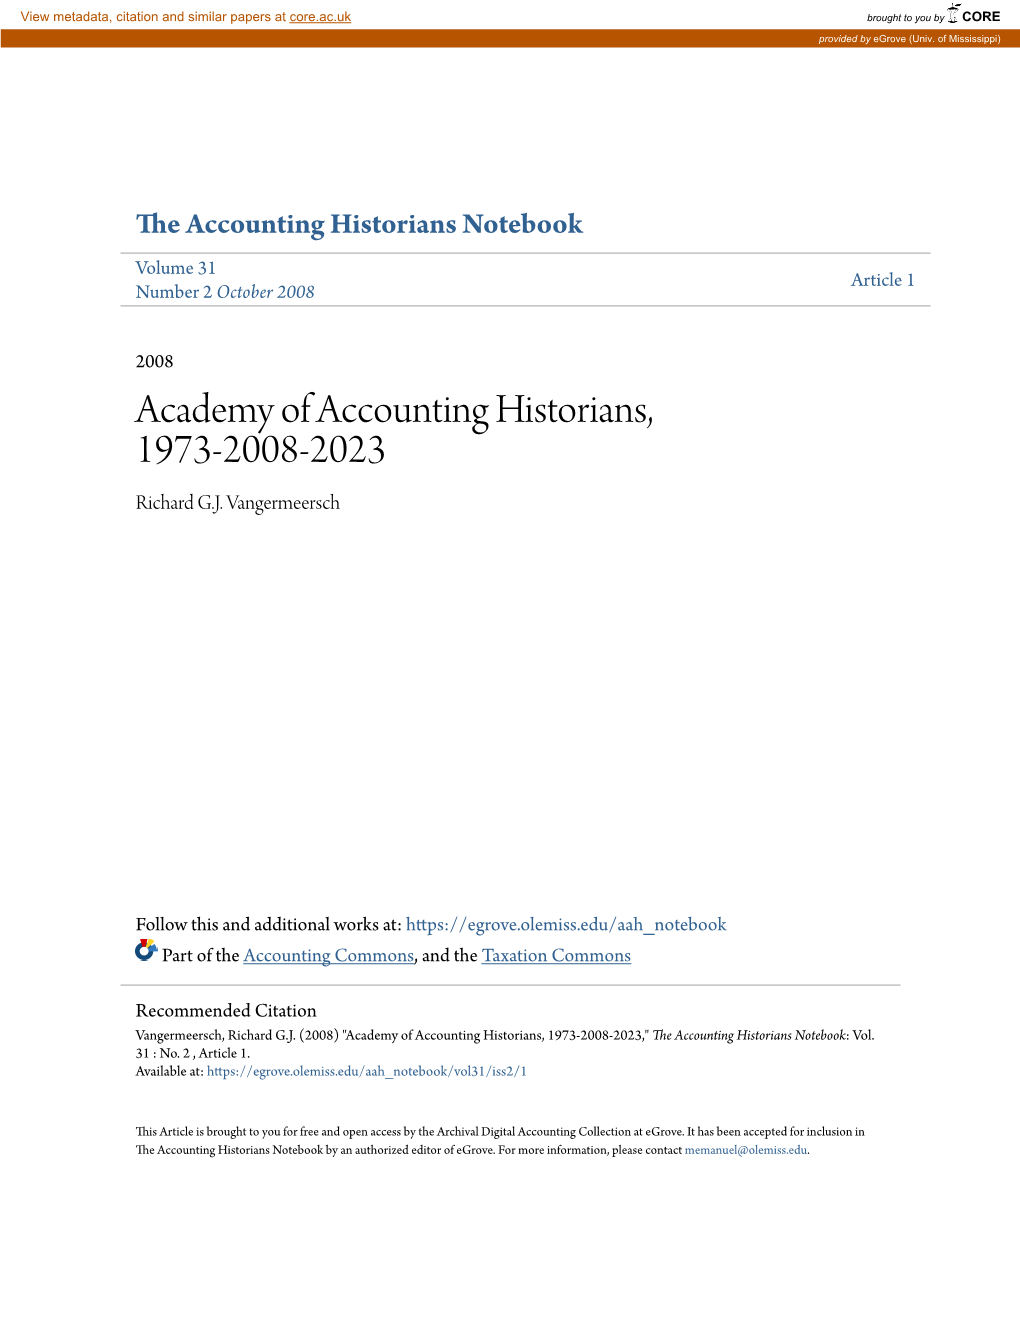 Academy of Accounting Historians, 1973-2008-2023 Richard G.J